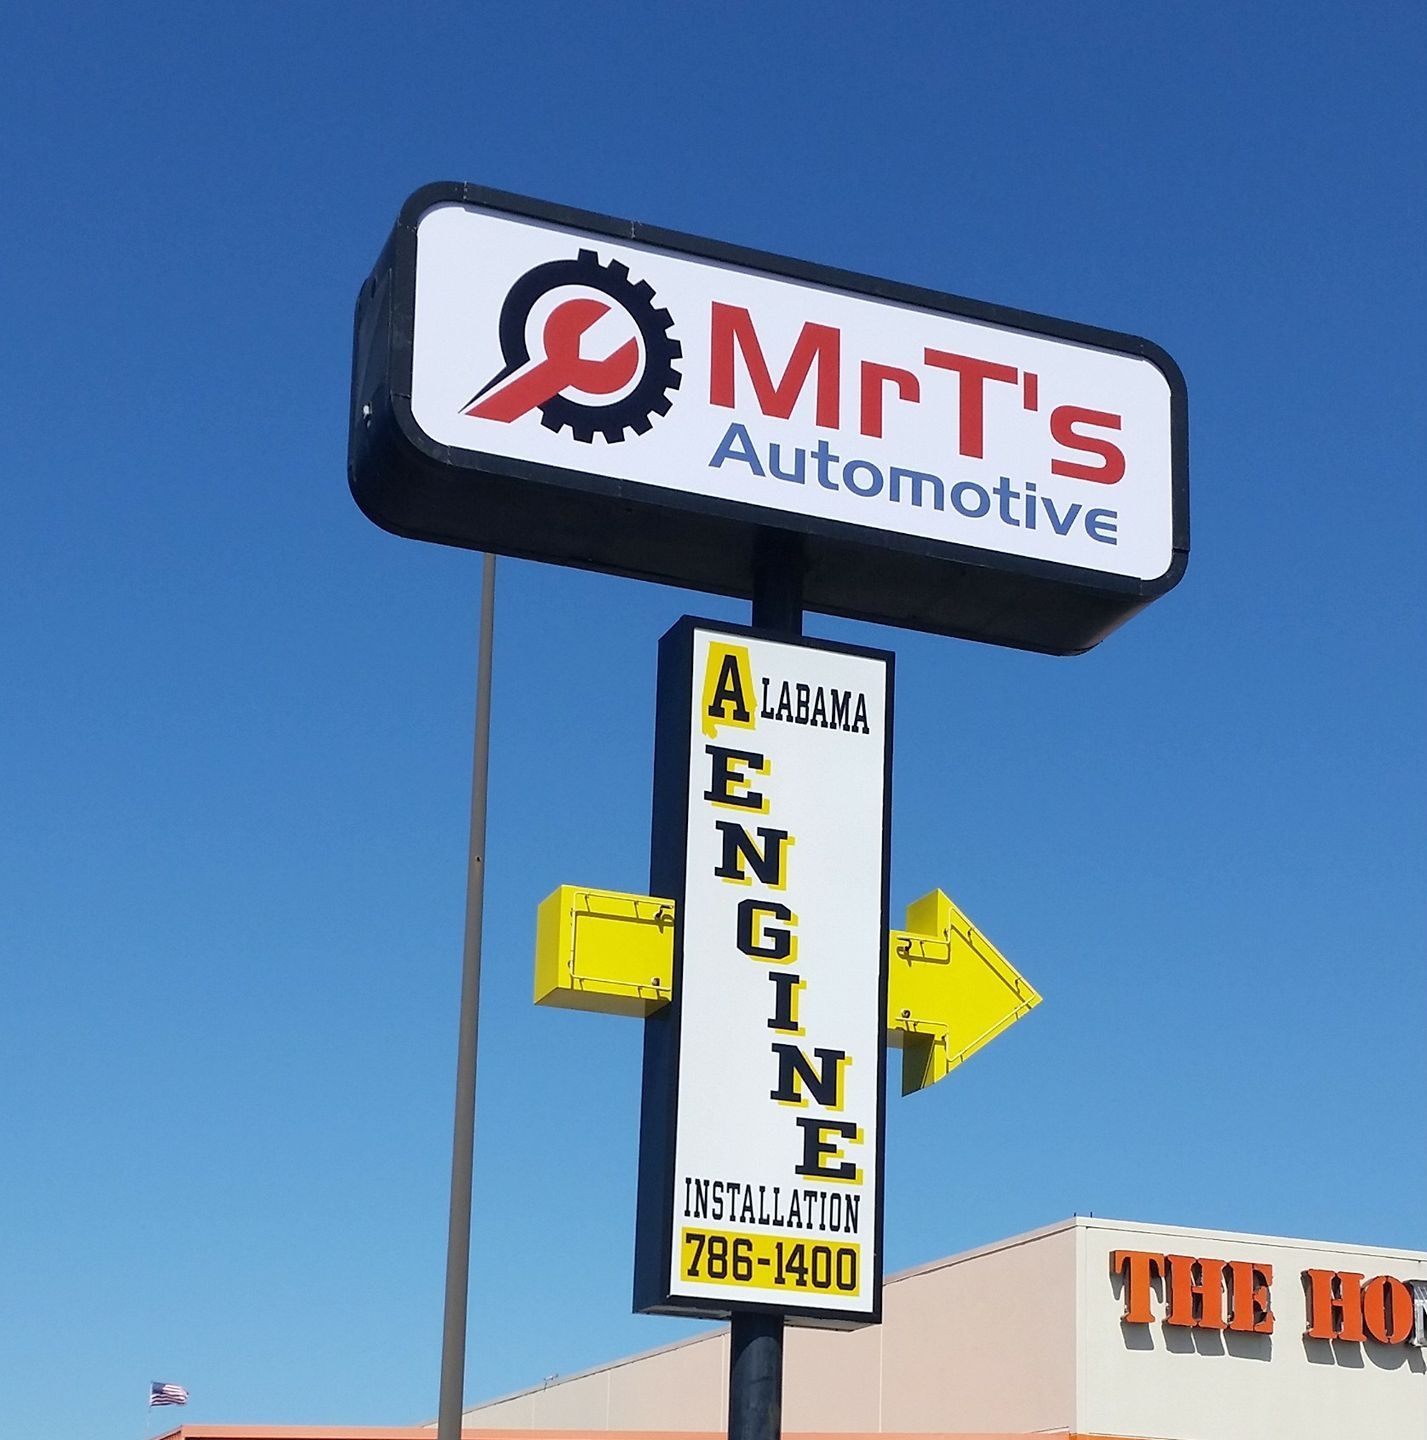 Business logo of Mr. T's Automotive